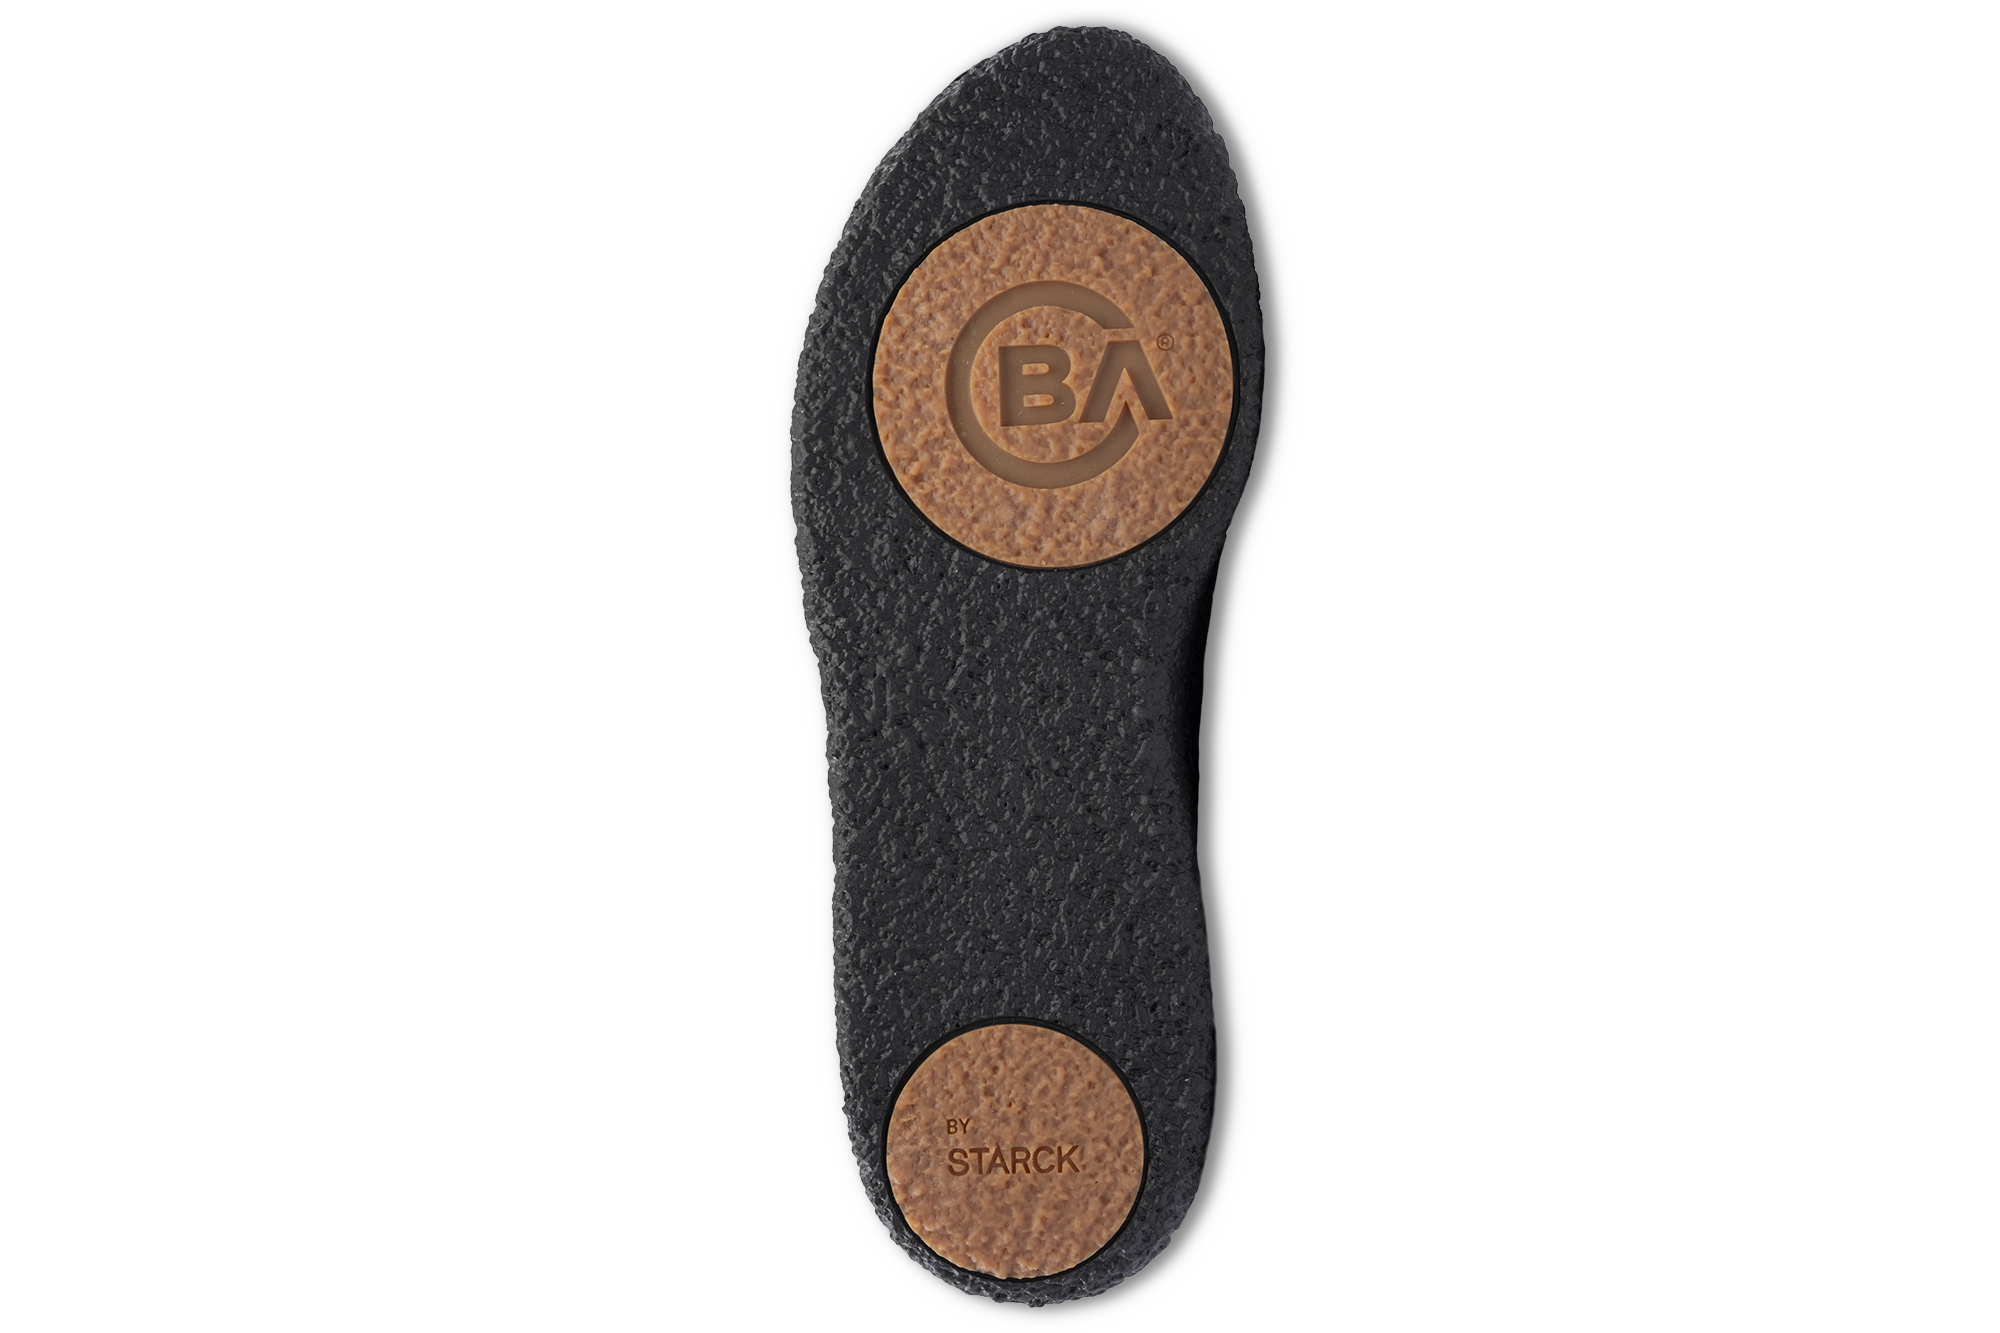 Baliston Smart Shoe bottom view black and beige sole